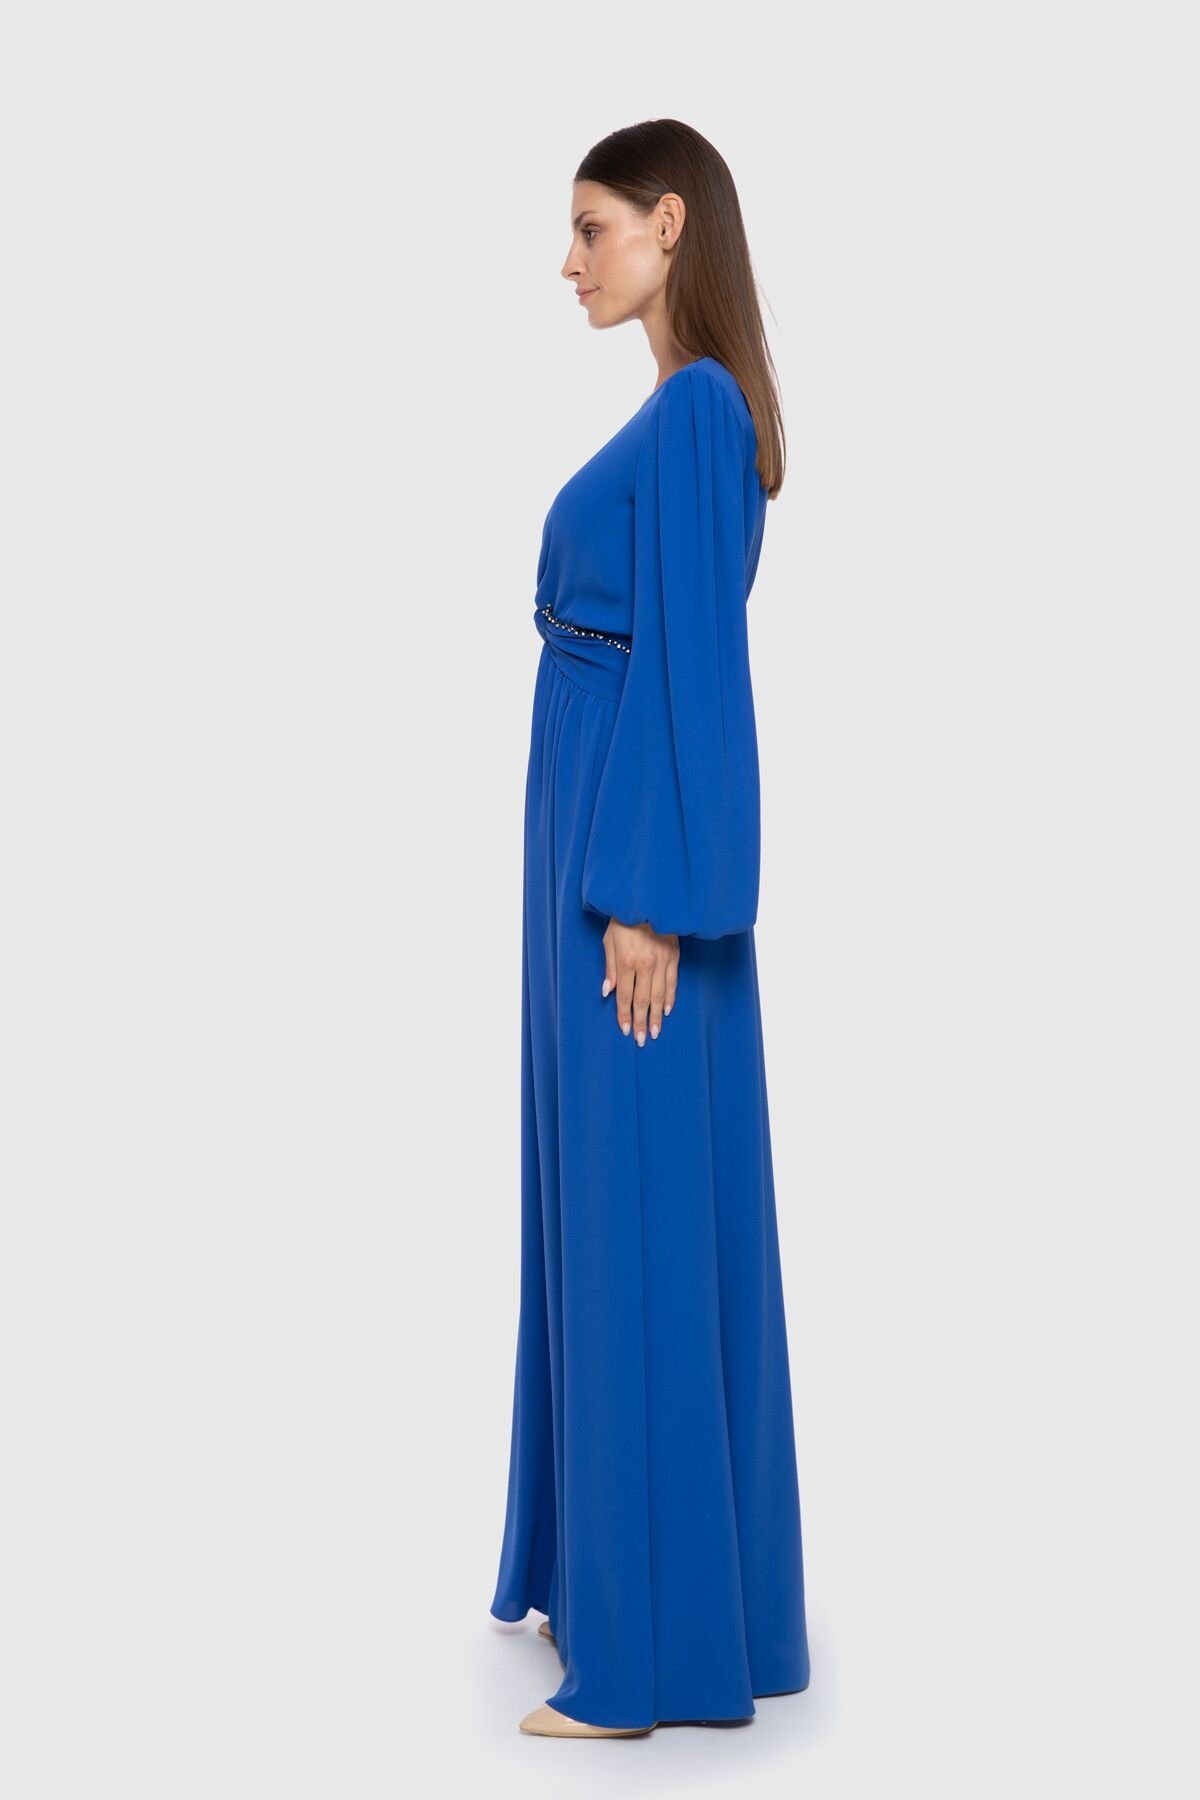 V Neck Long Blue Dress